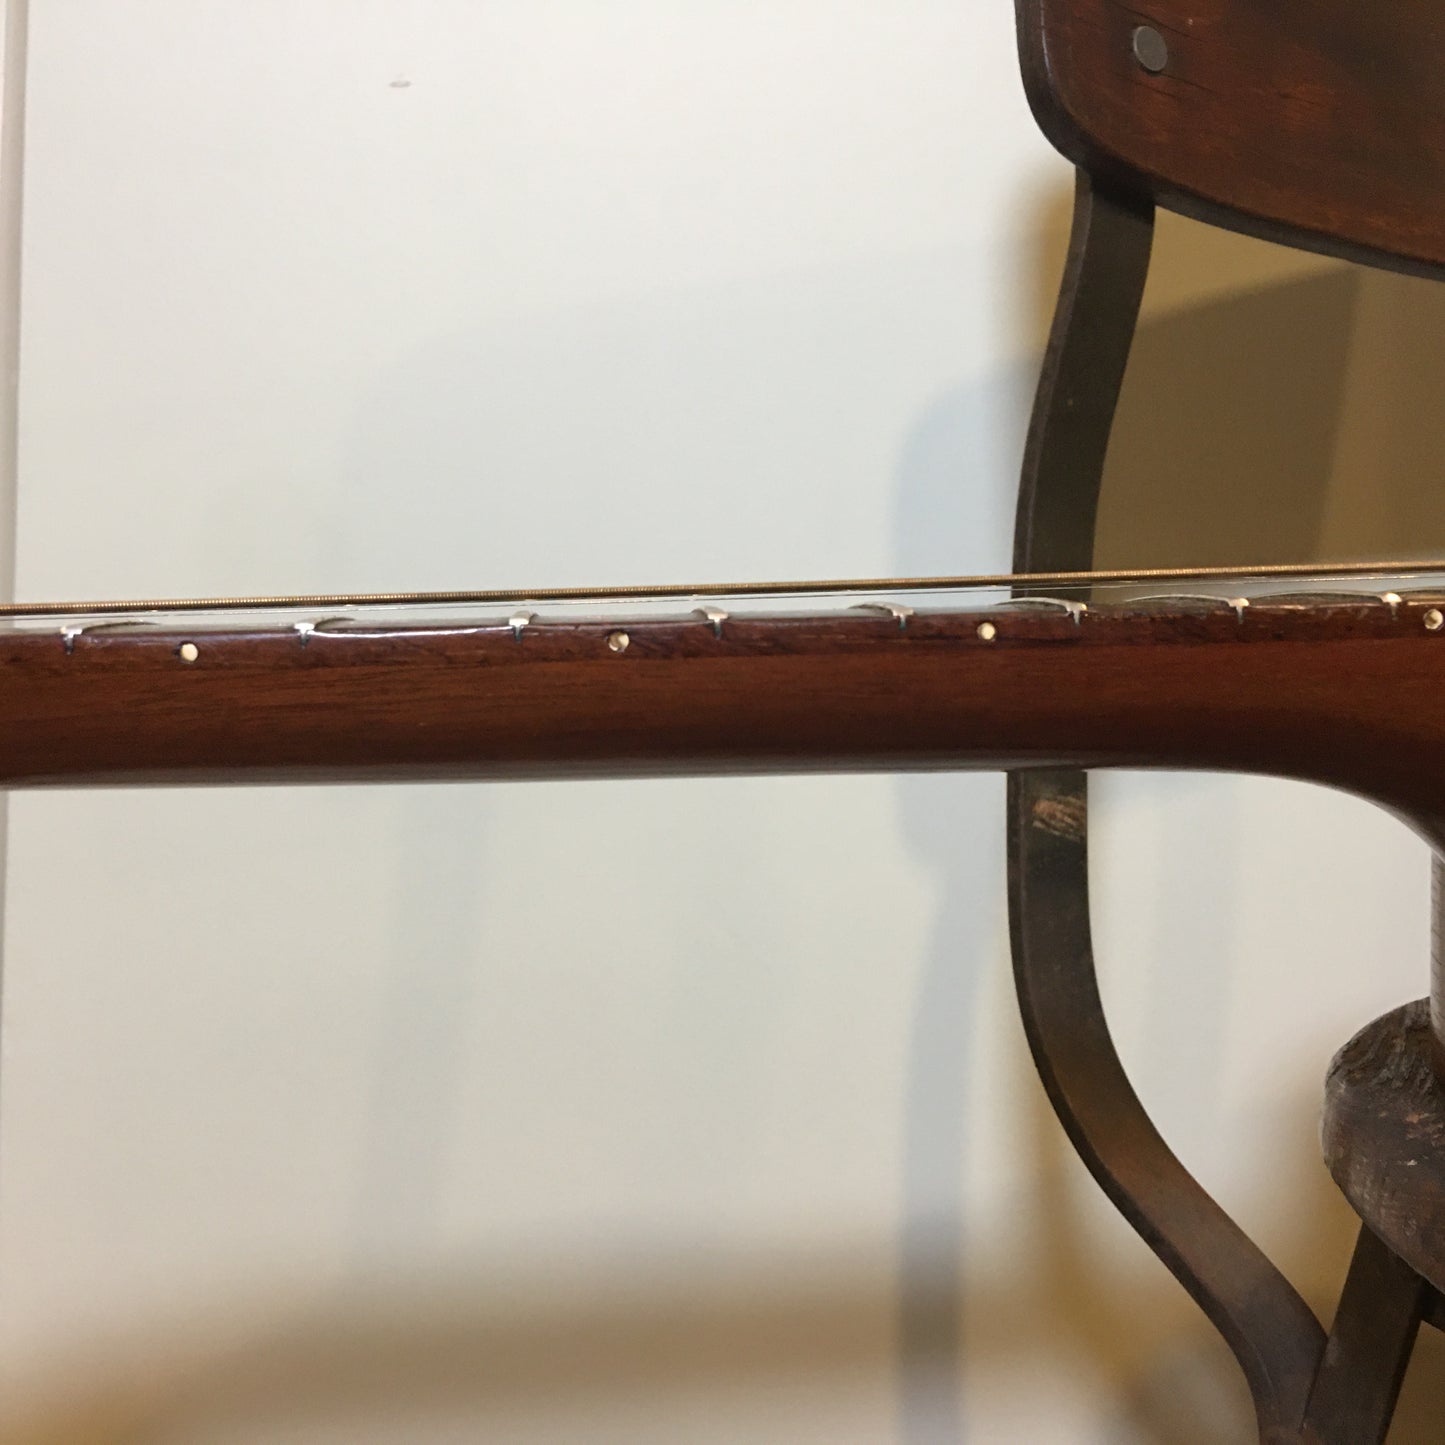 1967 Gibson LG-0 Small Body Acoustic Guitar Mahogany w/ Original Case